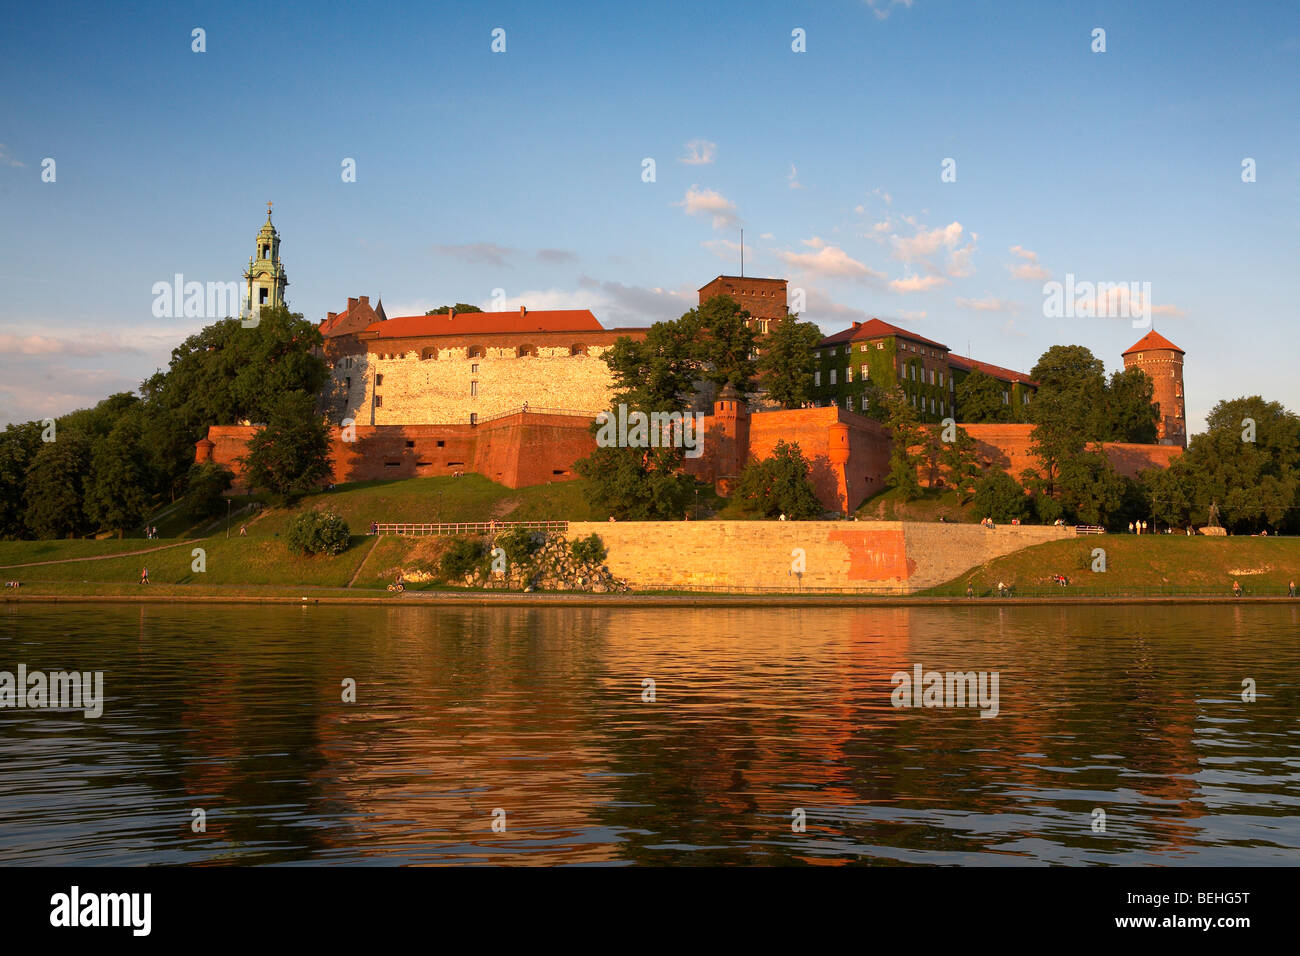 Eastern Europe Poland Malopolska Region Krakow Royal Wawel Hill Cathedral Castle River Vistula Stock Photo